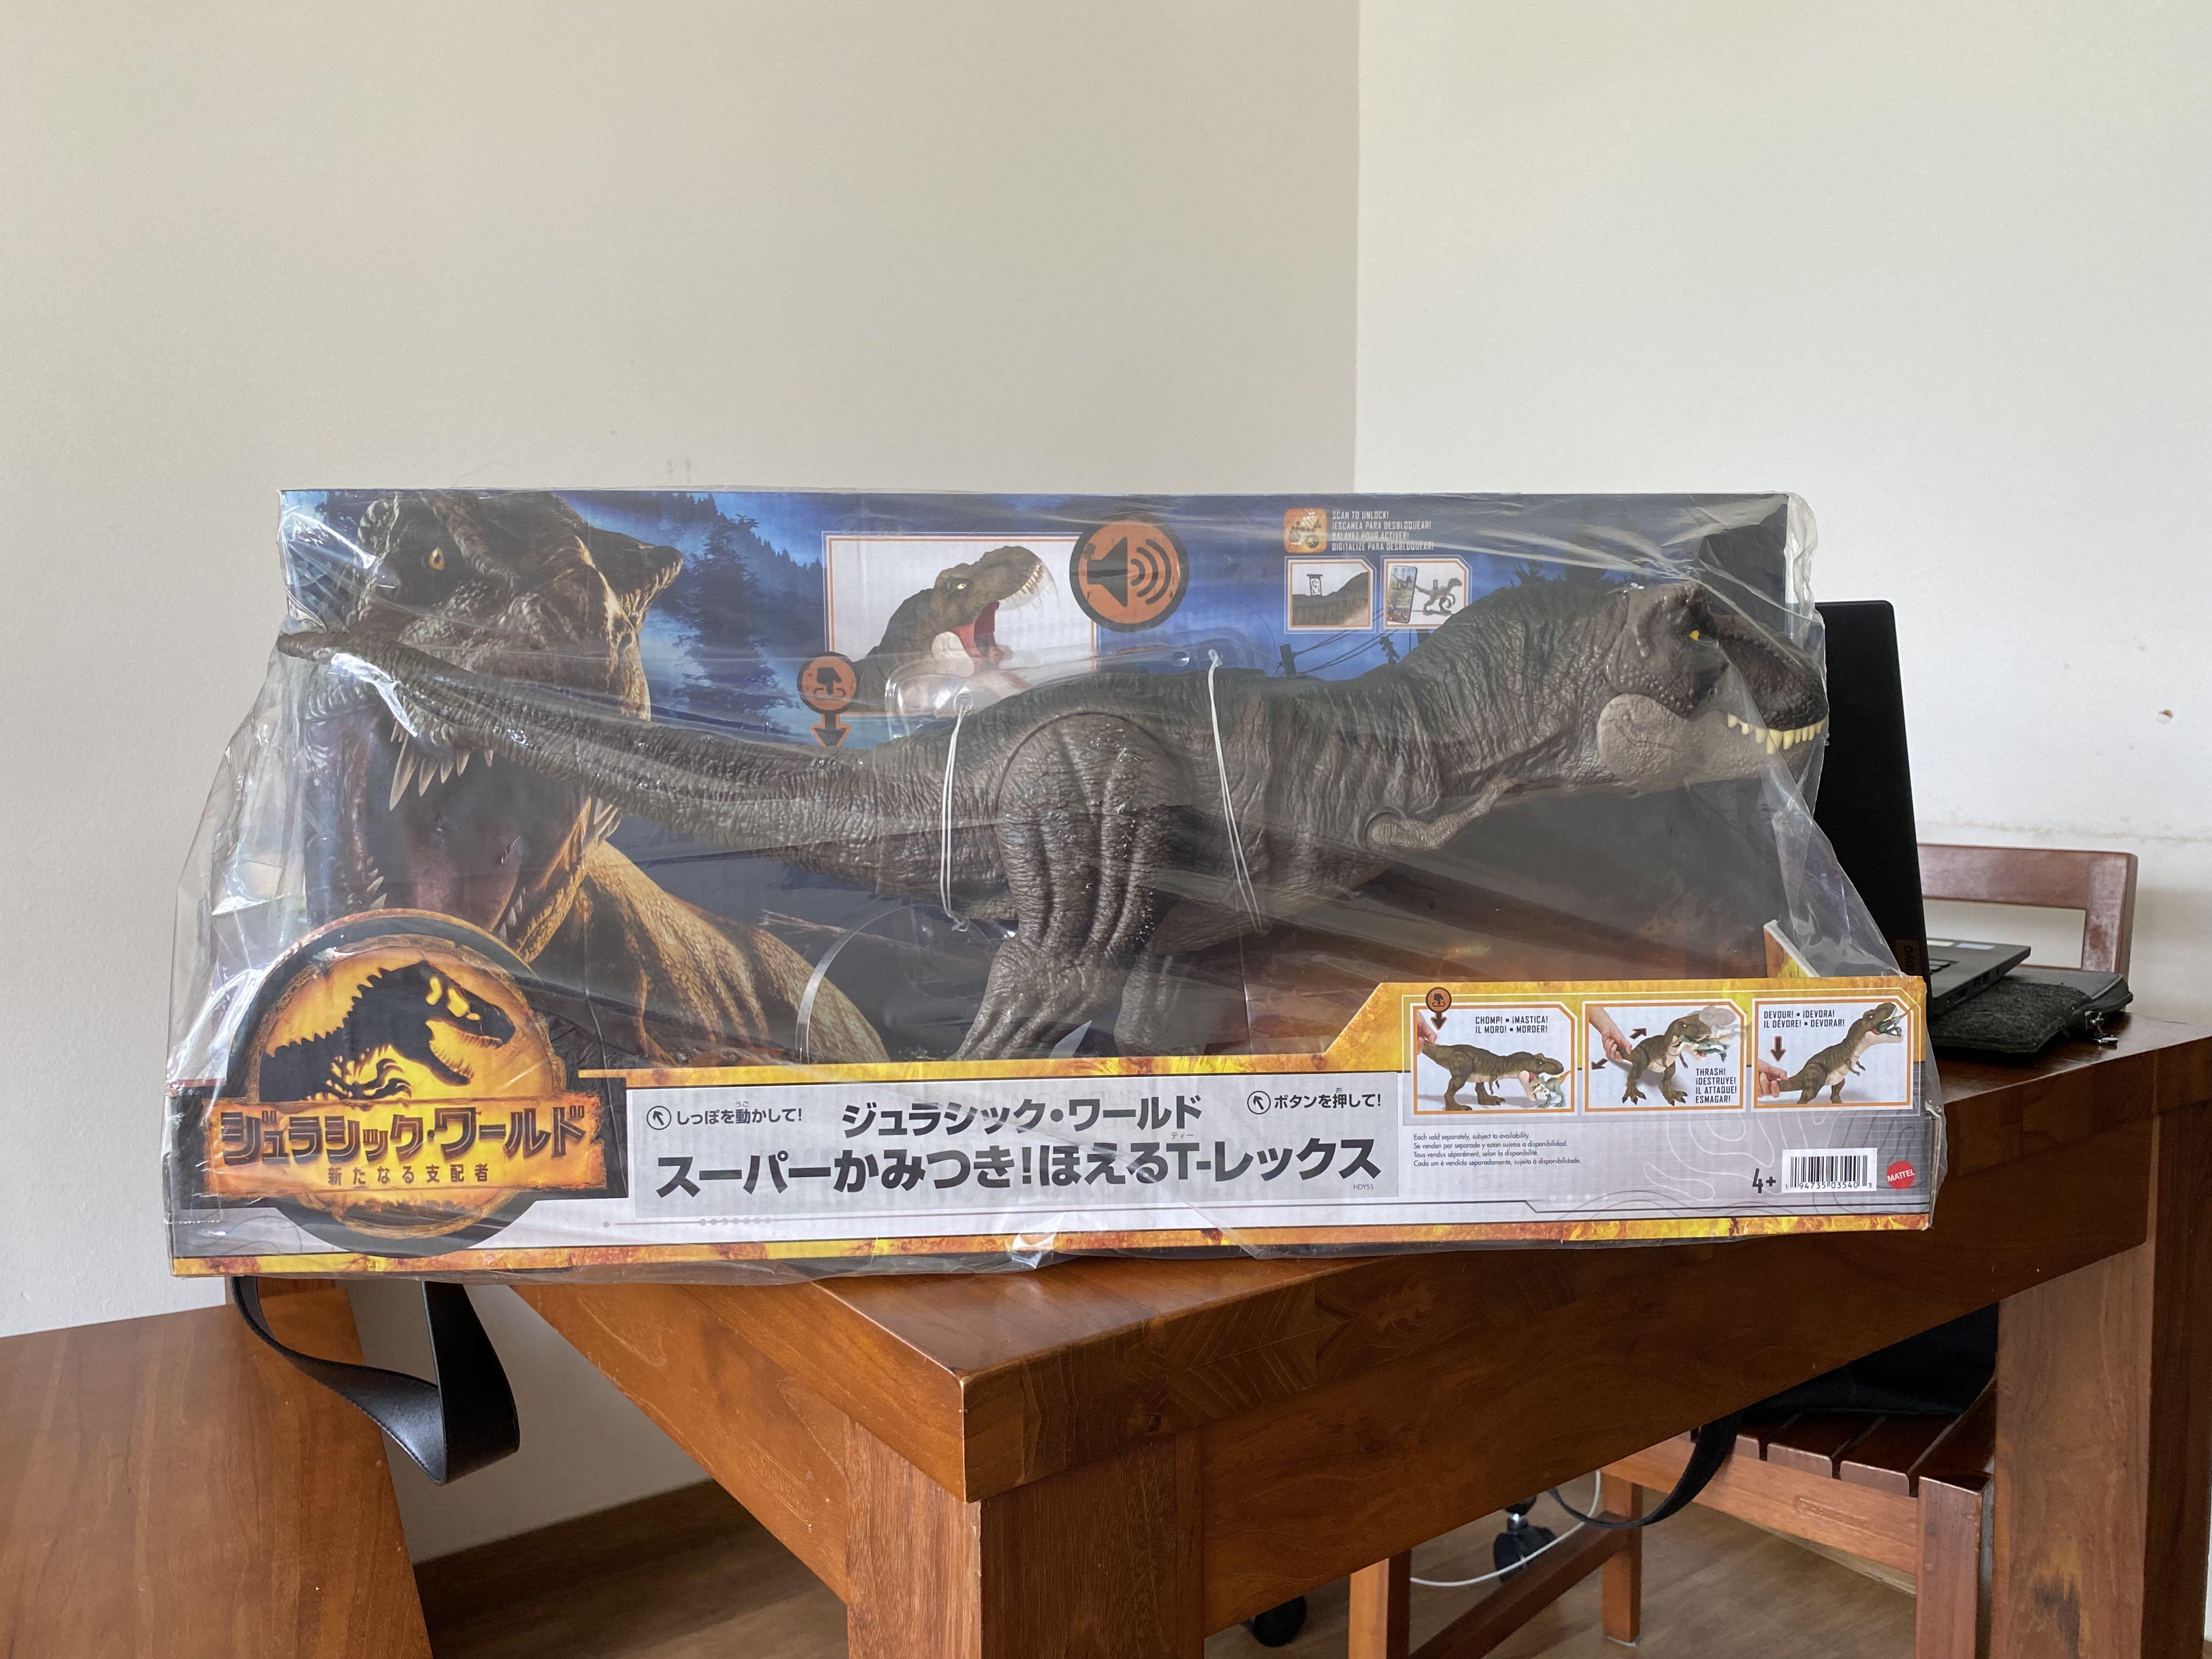  Jurassic World Dominion Thrash 'N Devour Tyrannosaurus